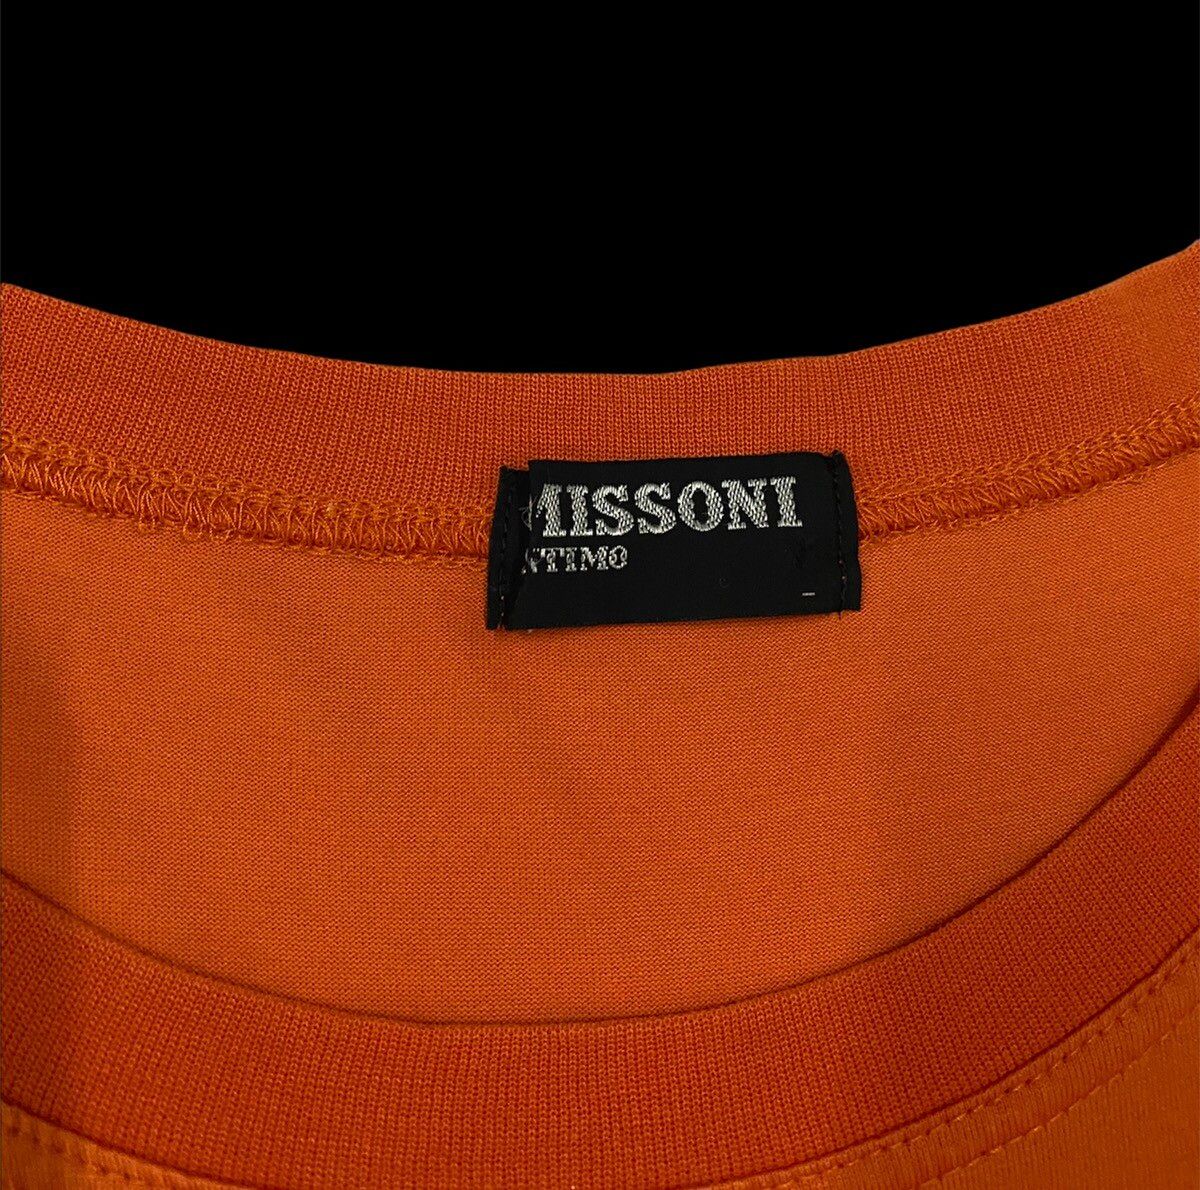 Missoni Intimo🍊➡️ Arrow Printed Colorful Orange Tee - 7